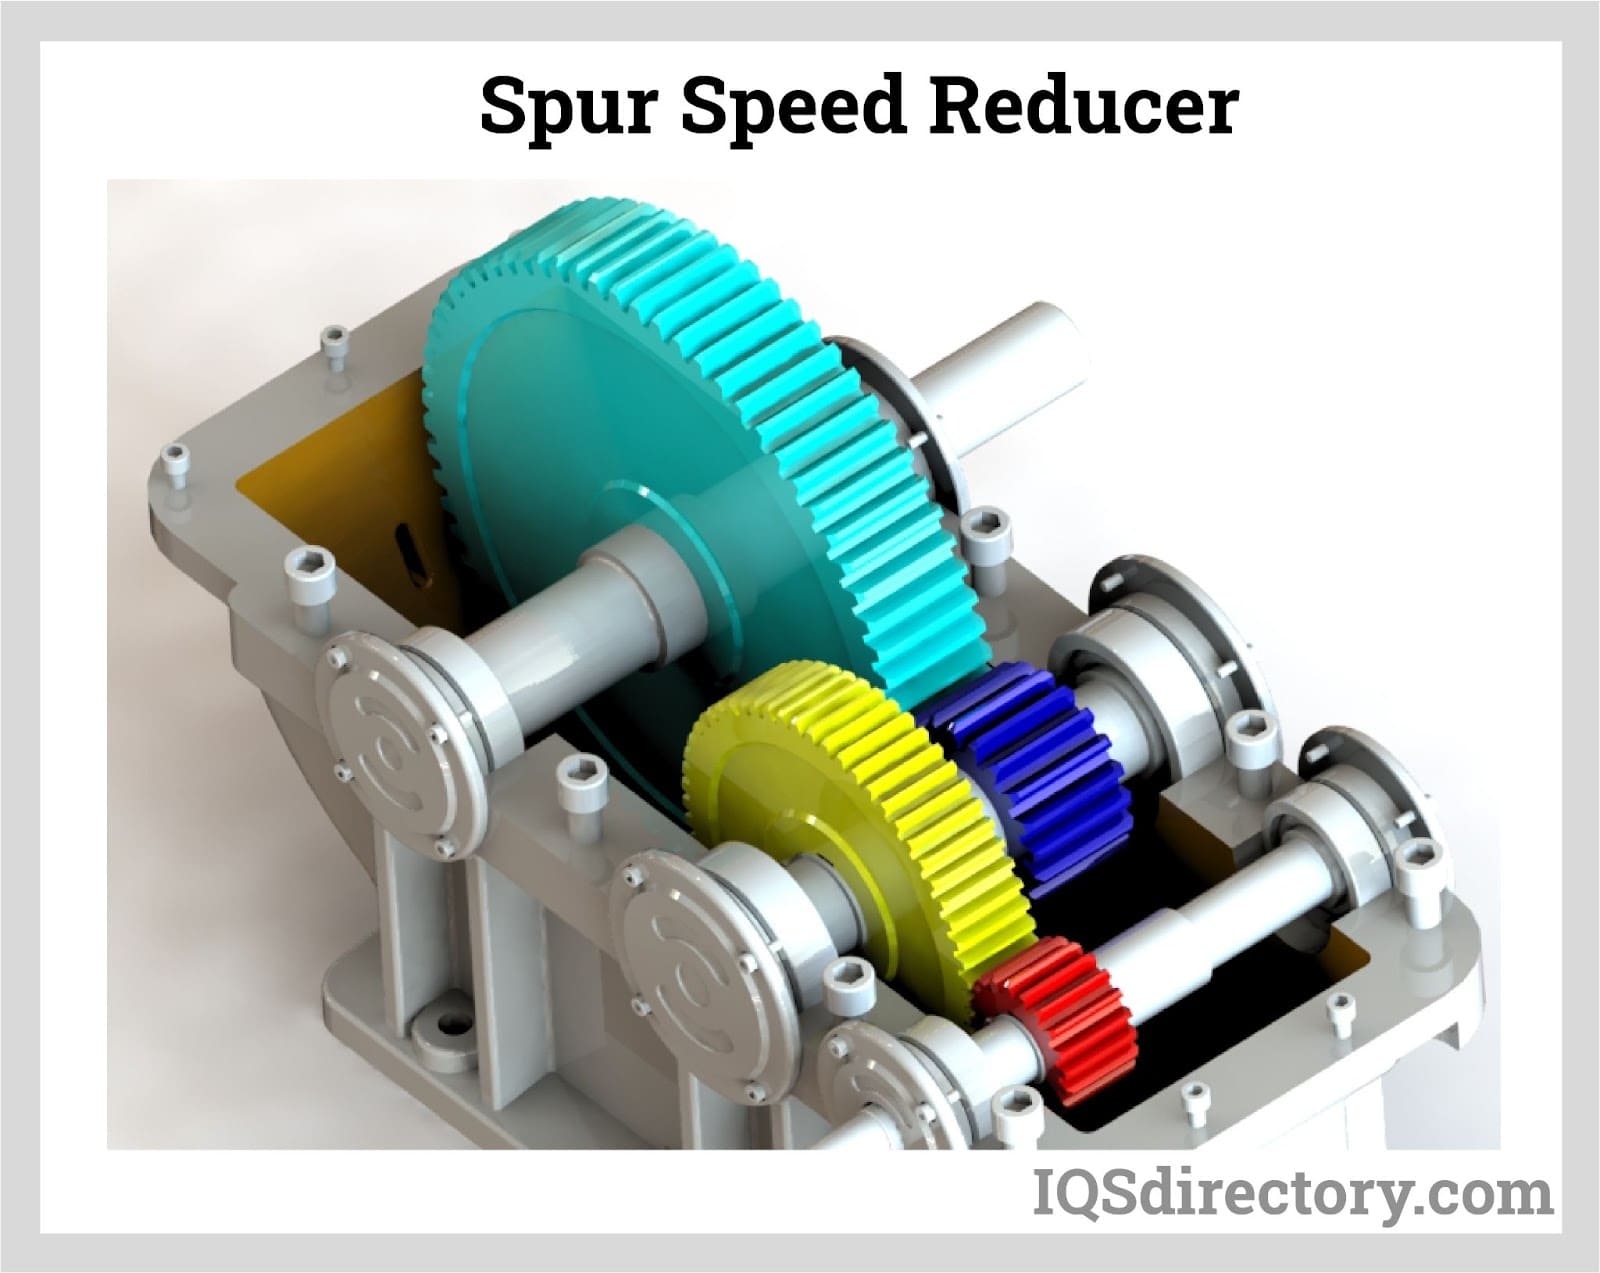 Spur Speed Reducer